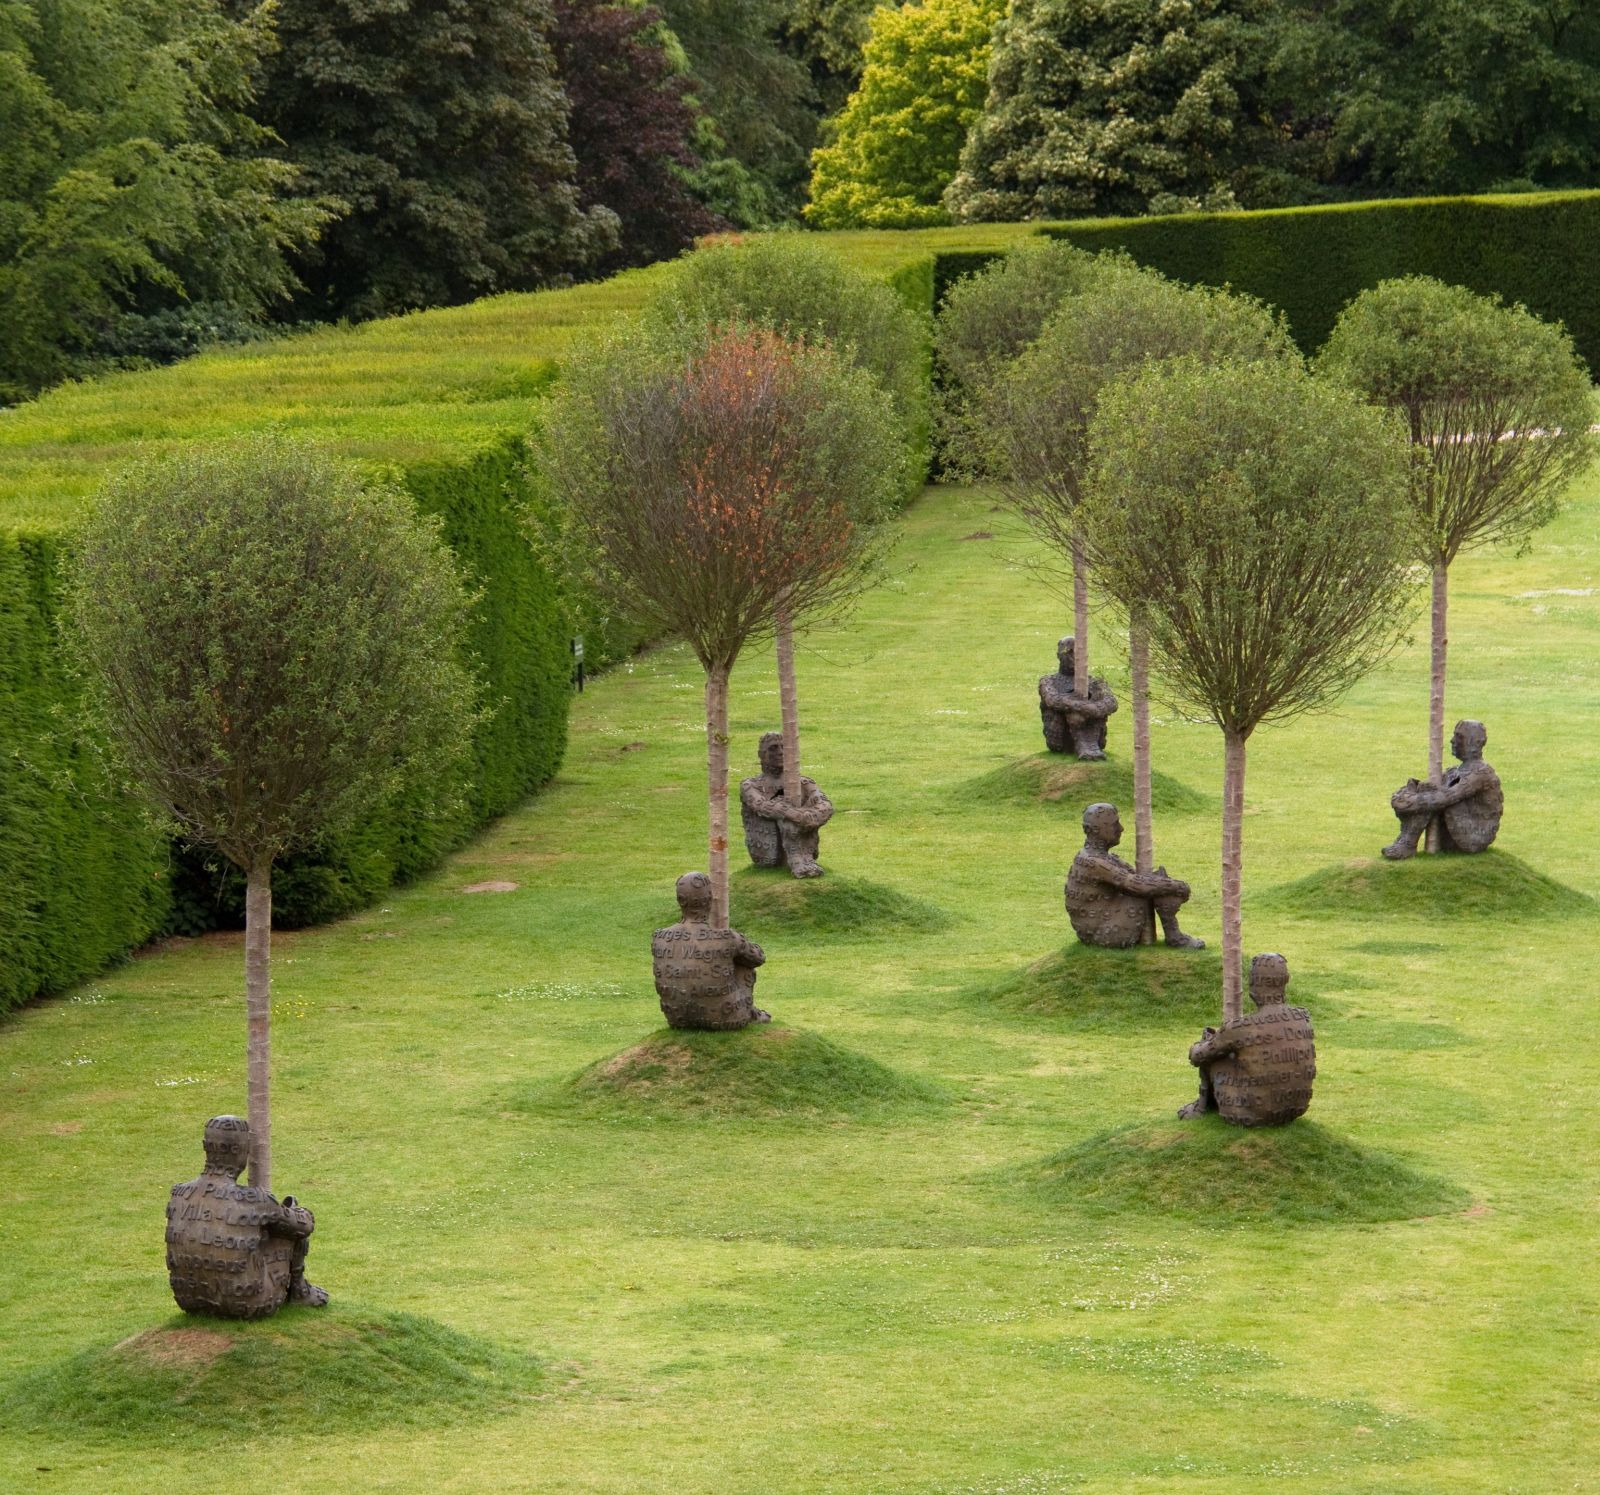 stunning sculpture the heart of trees yorkshire sculpture park uk